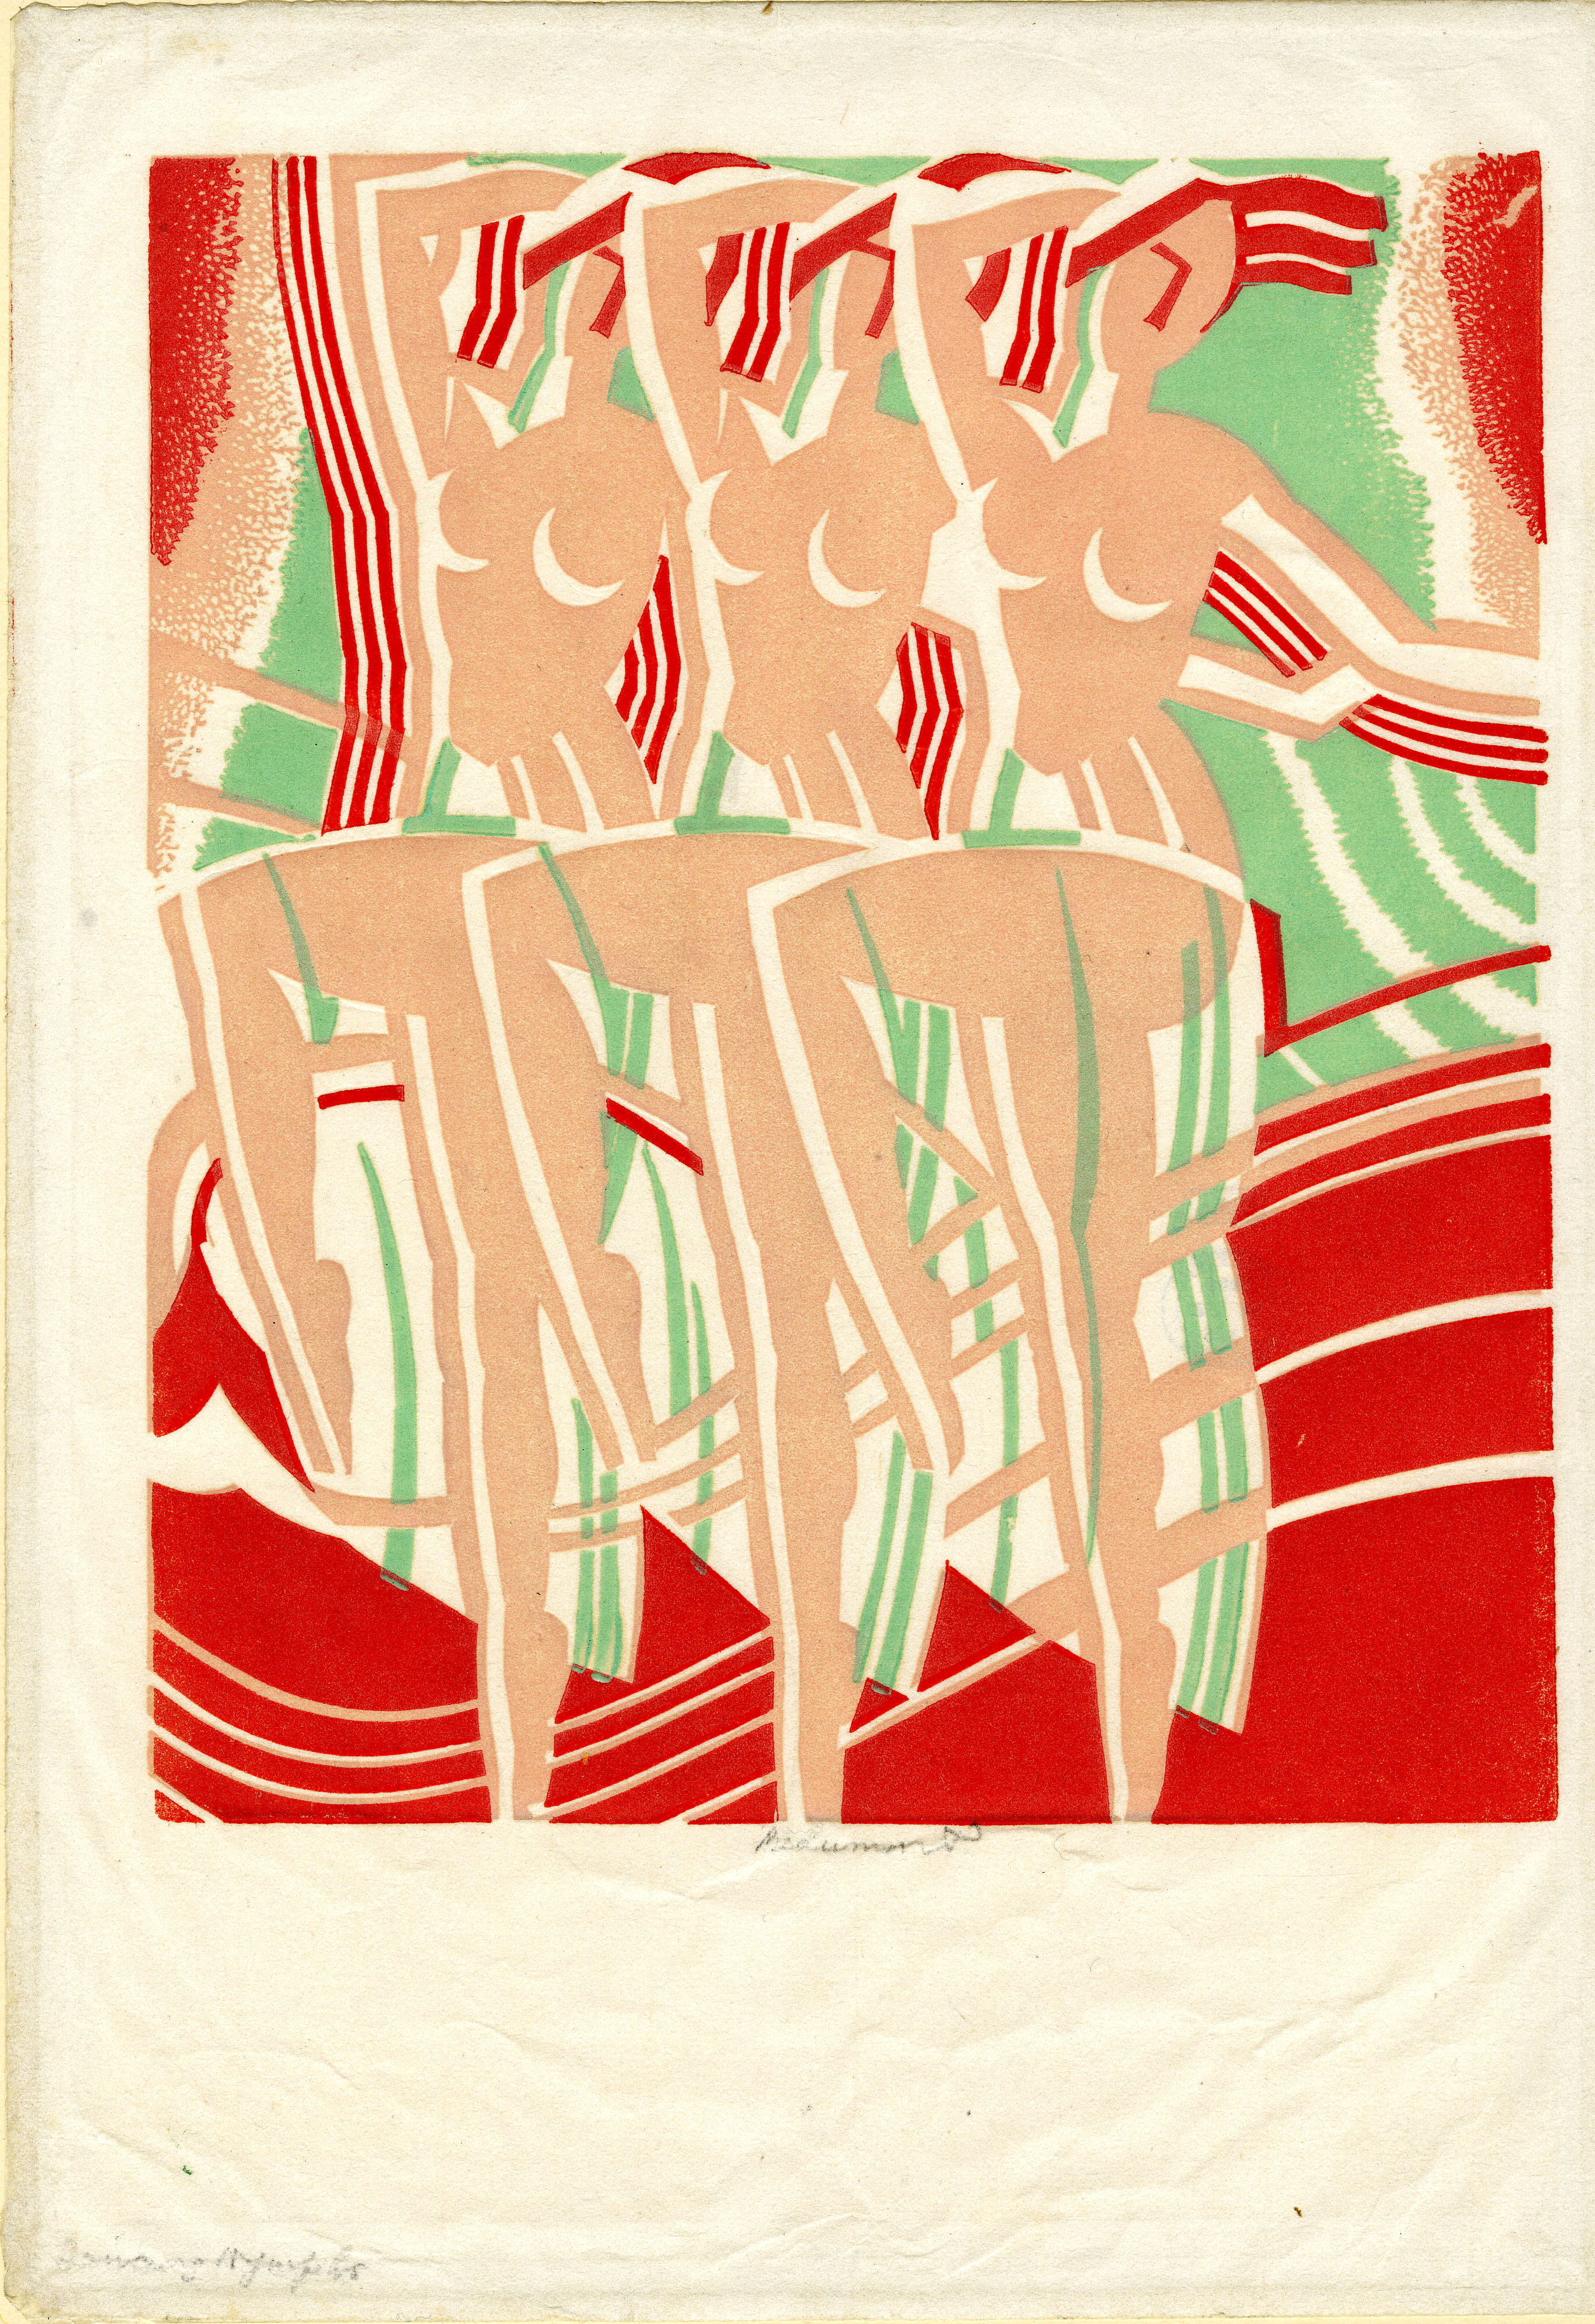 Dancing nymphs (1934)